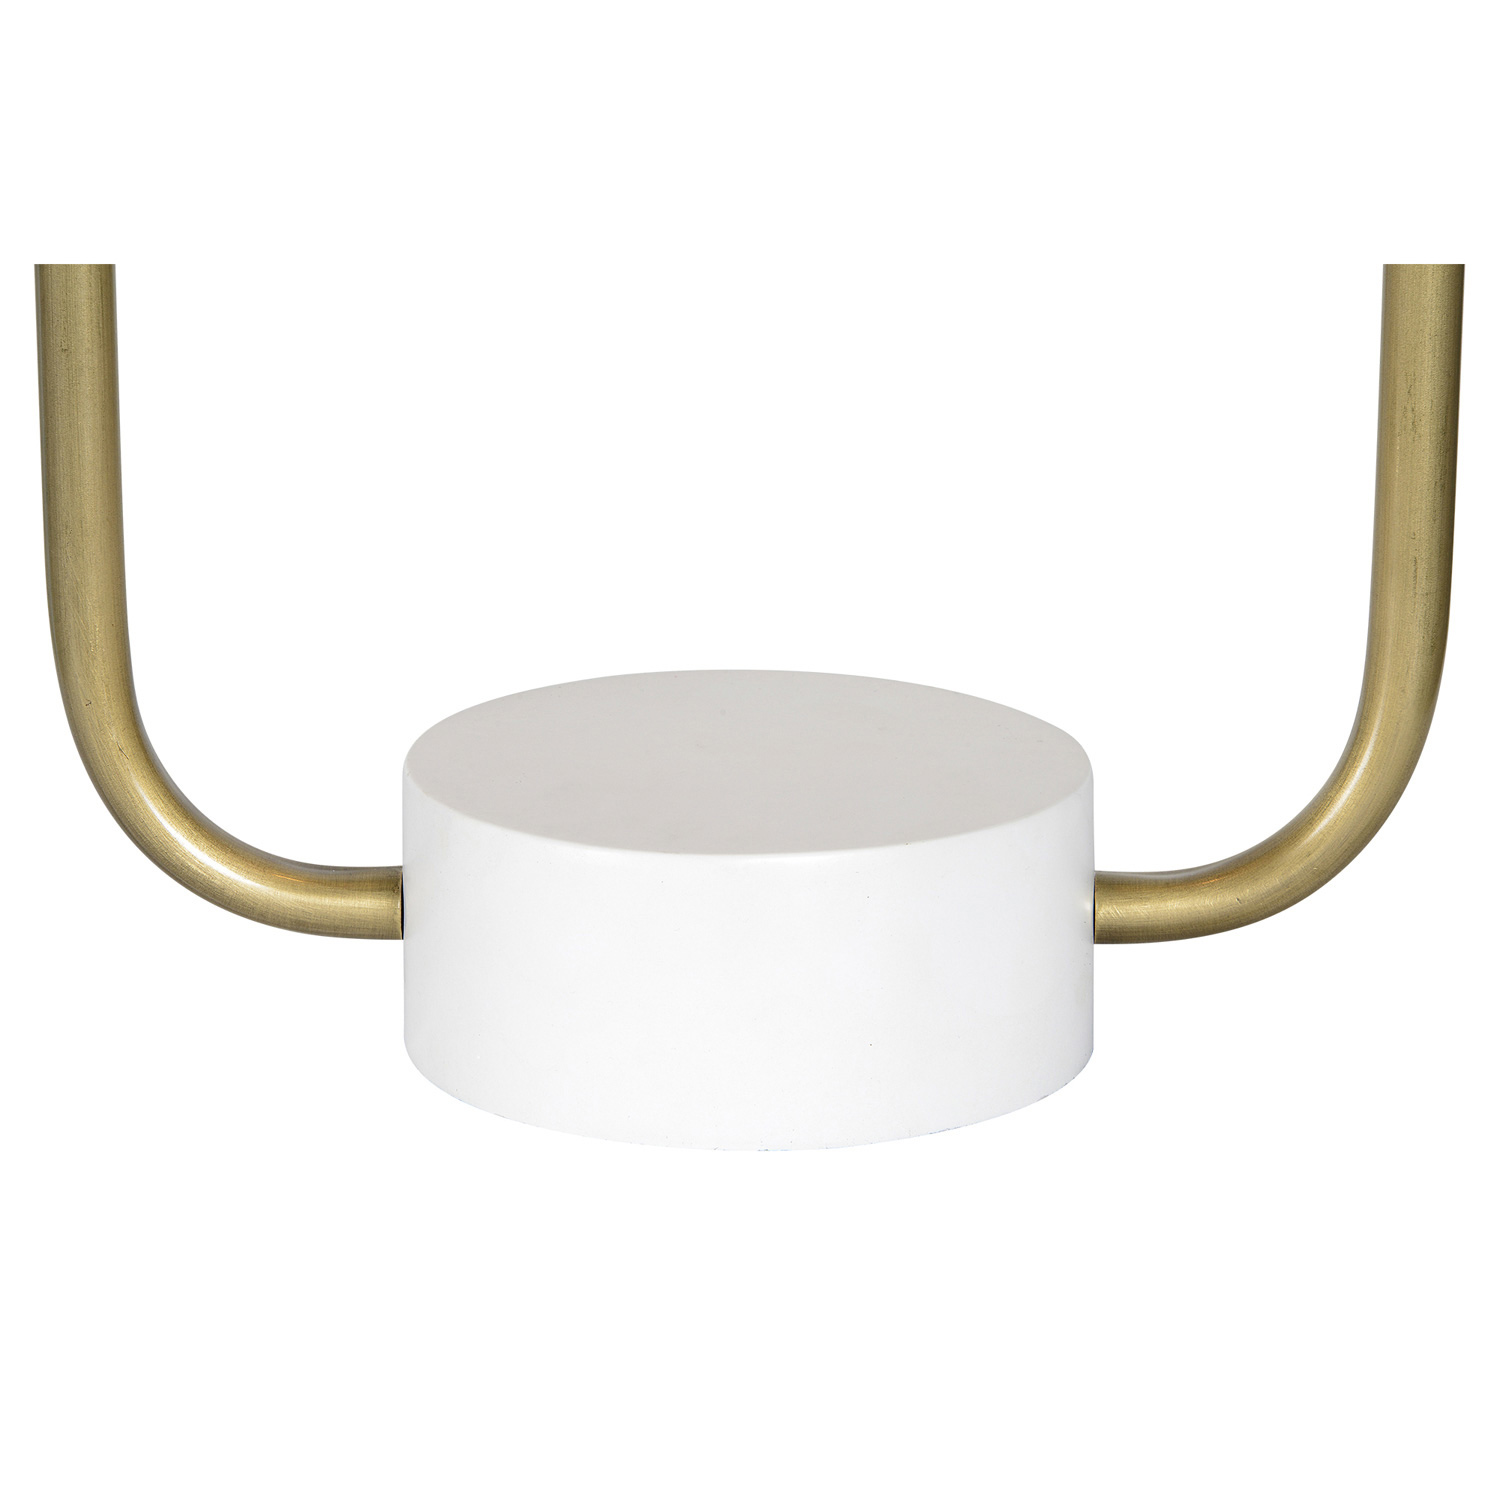 Ren-Wil Sinclair Table Lamp - Antique Brass/Matte Cream